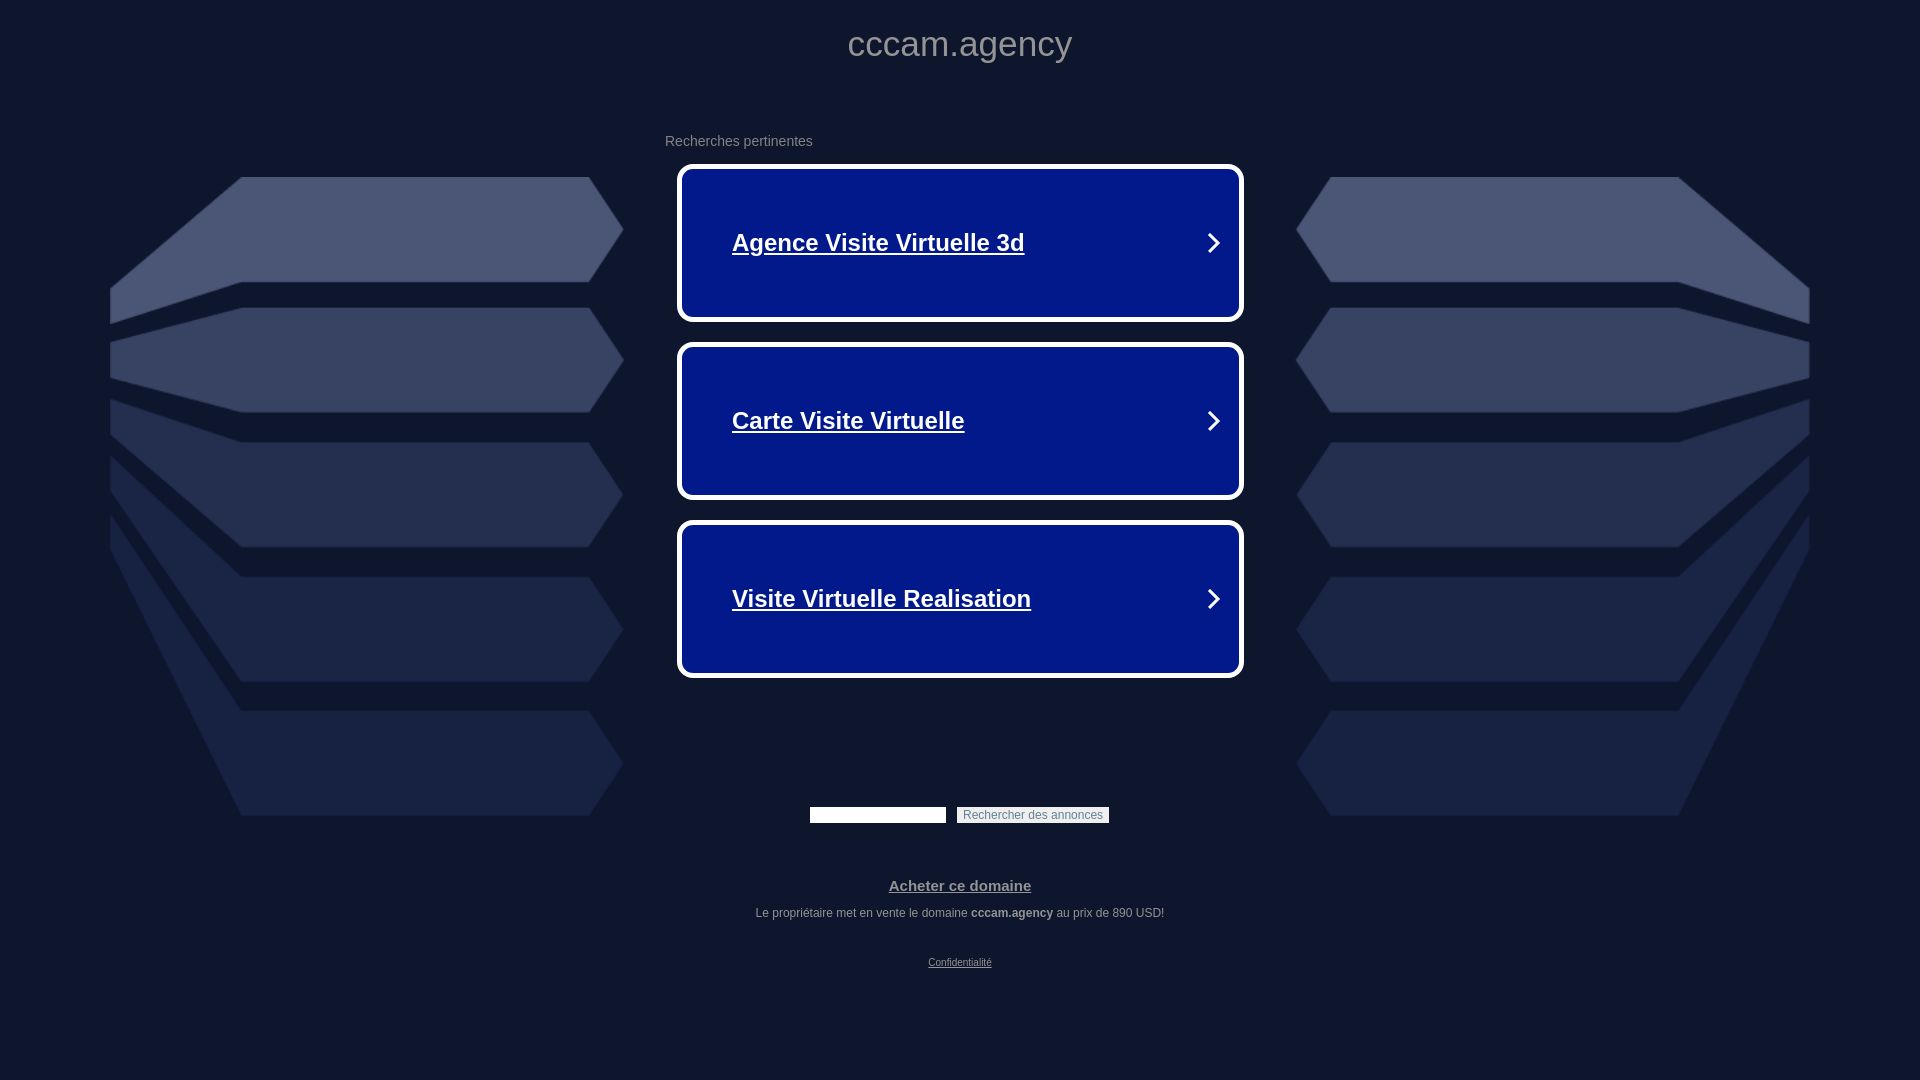 Website status 1.cccam.agency is   ONLINE